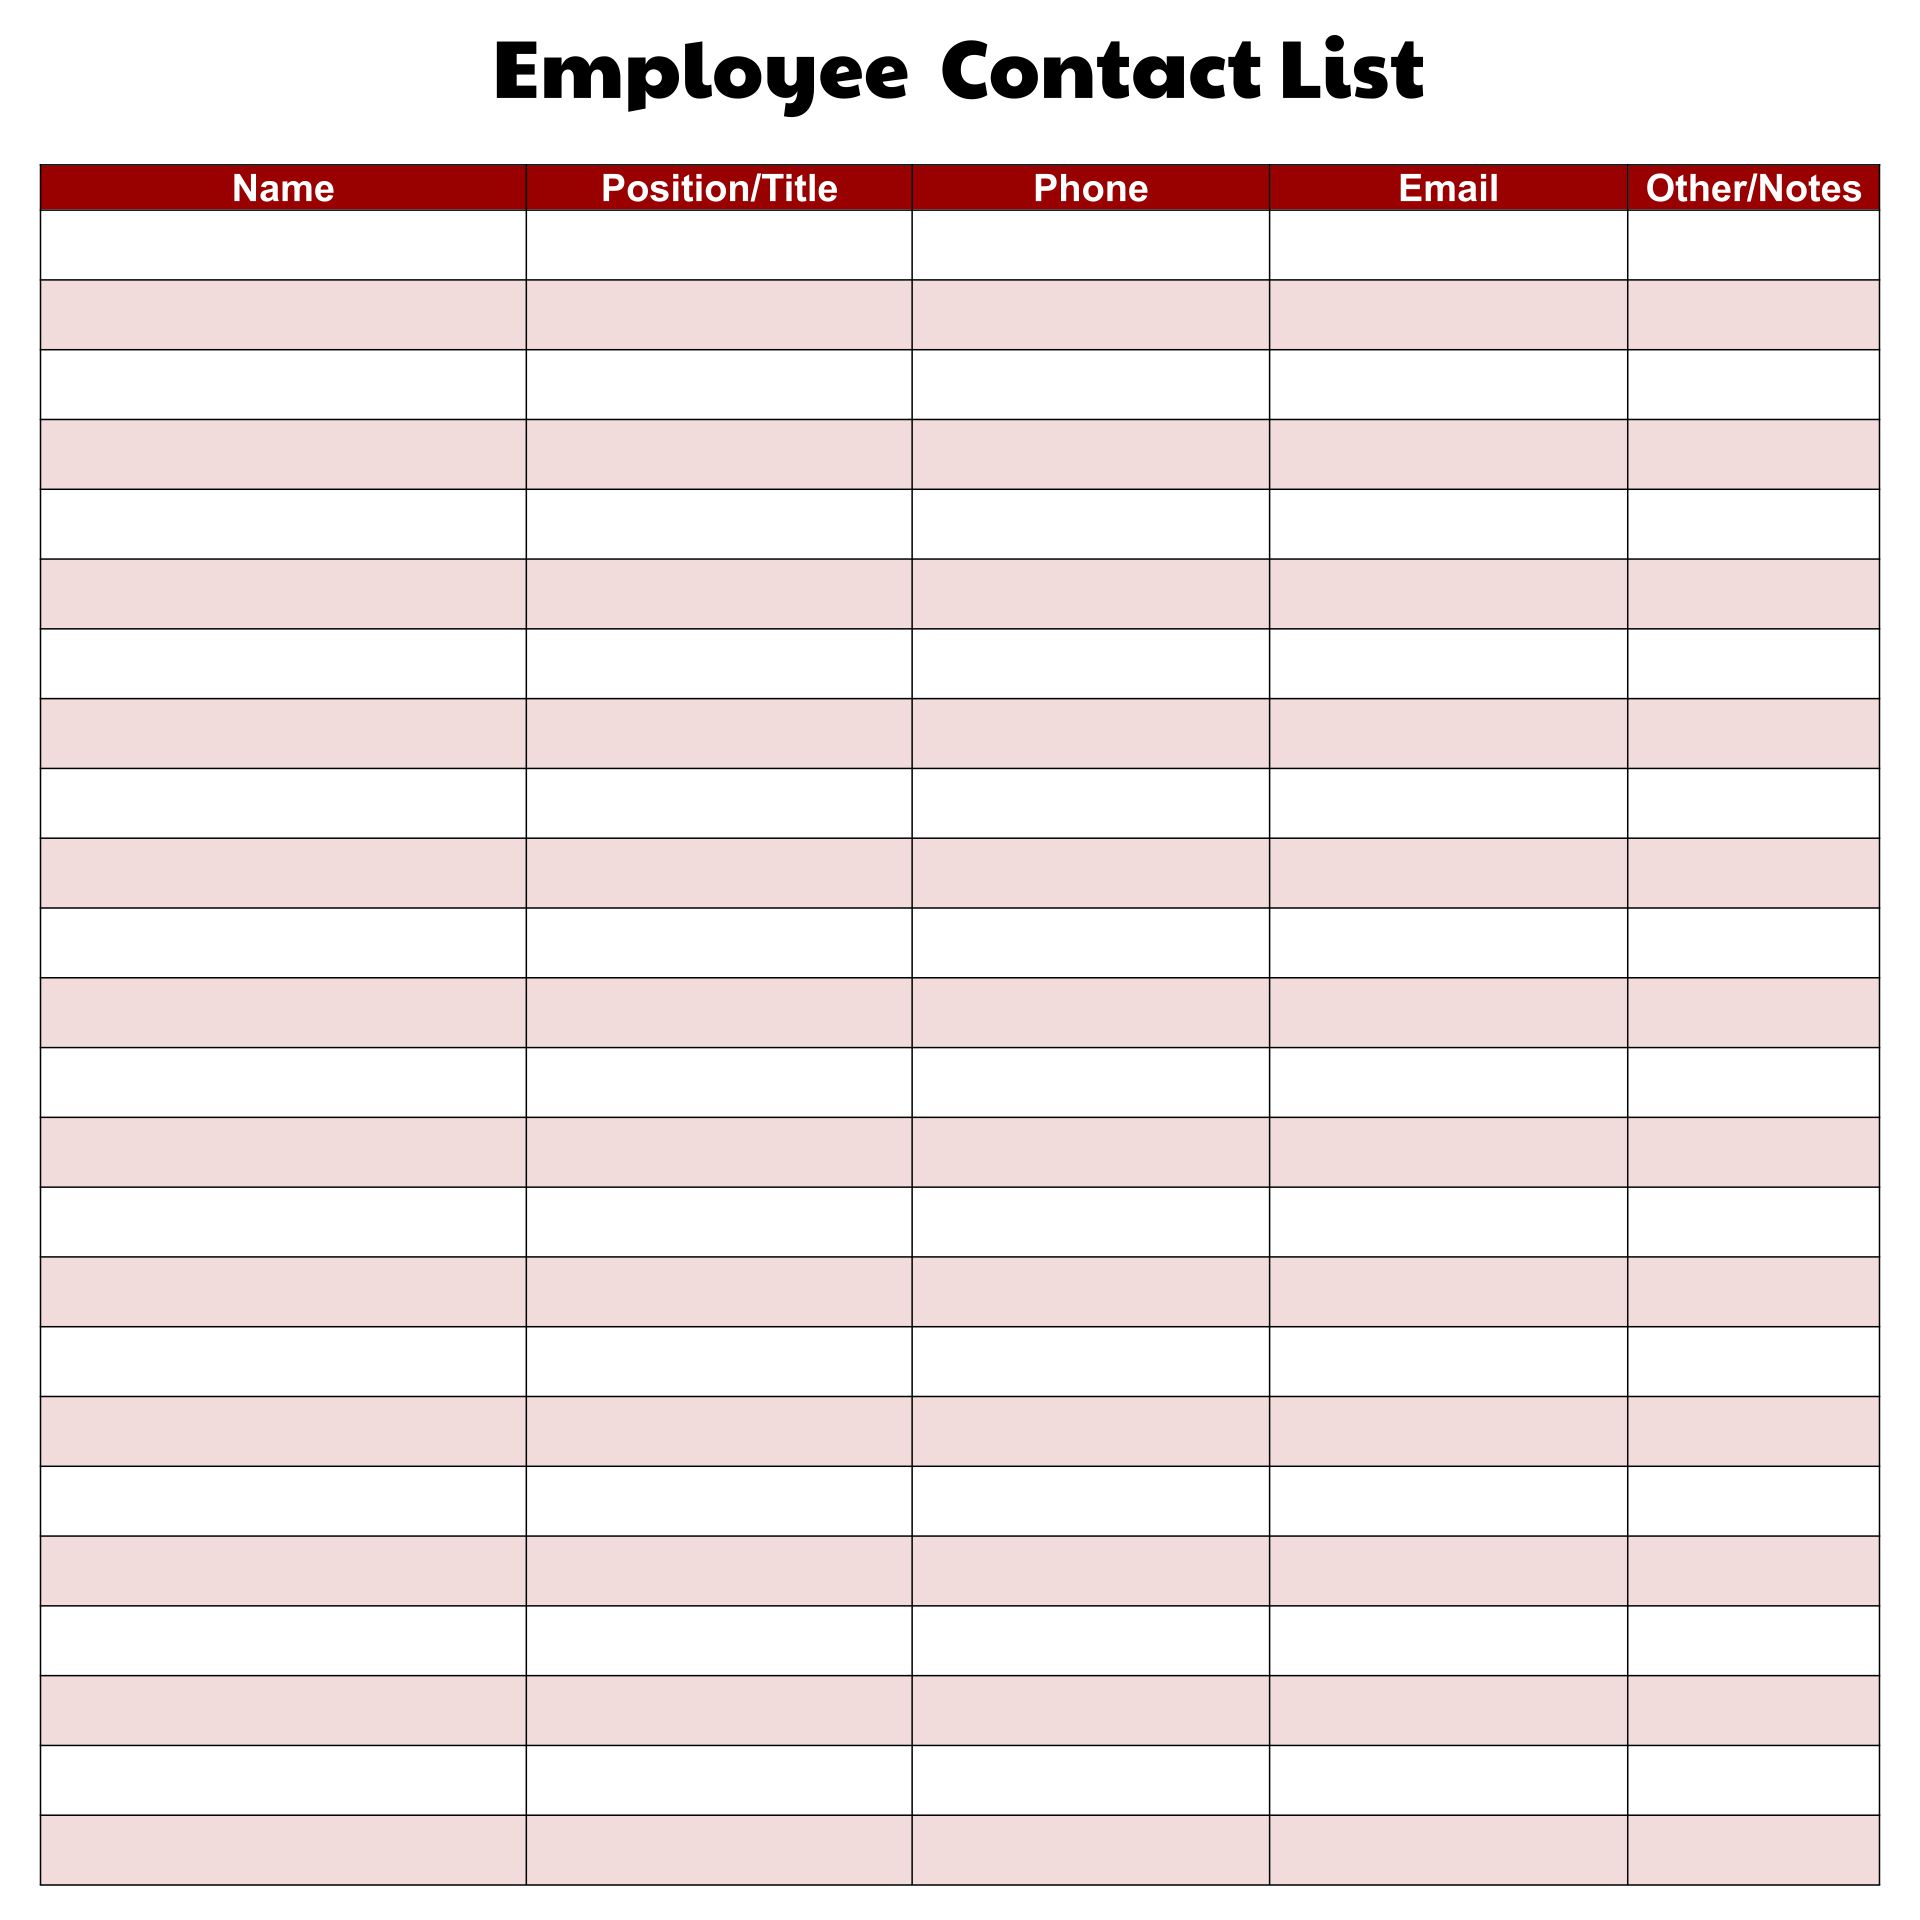 Employee Contact List Template